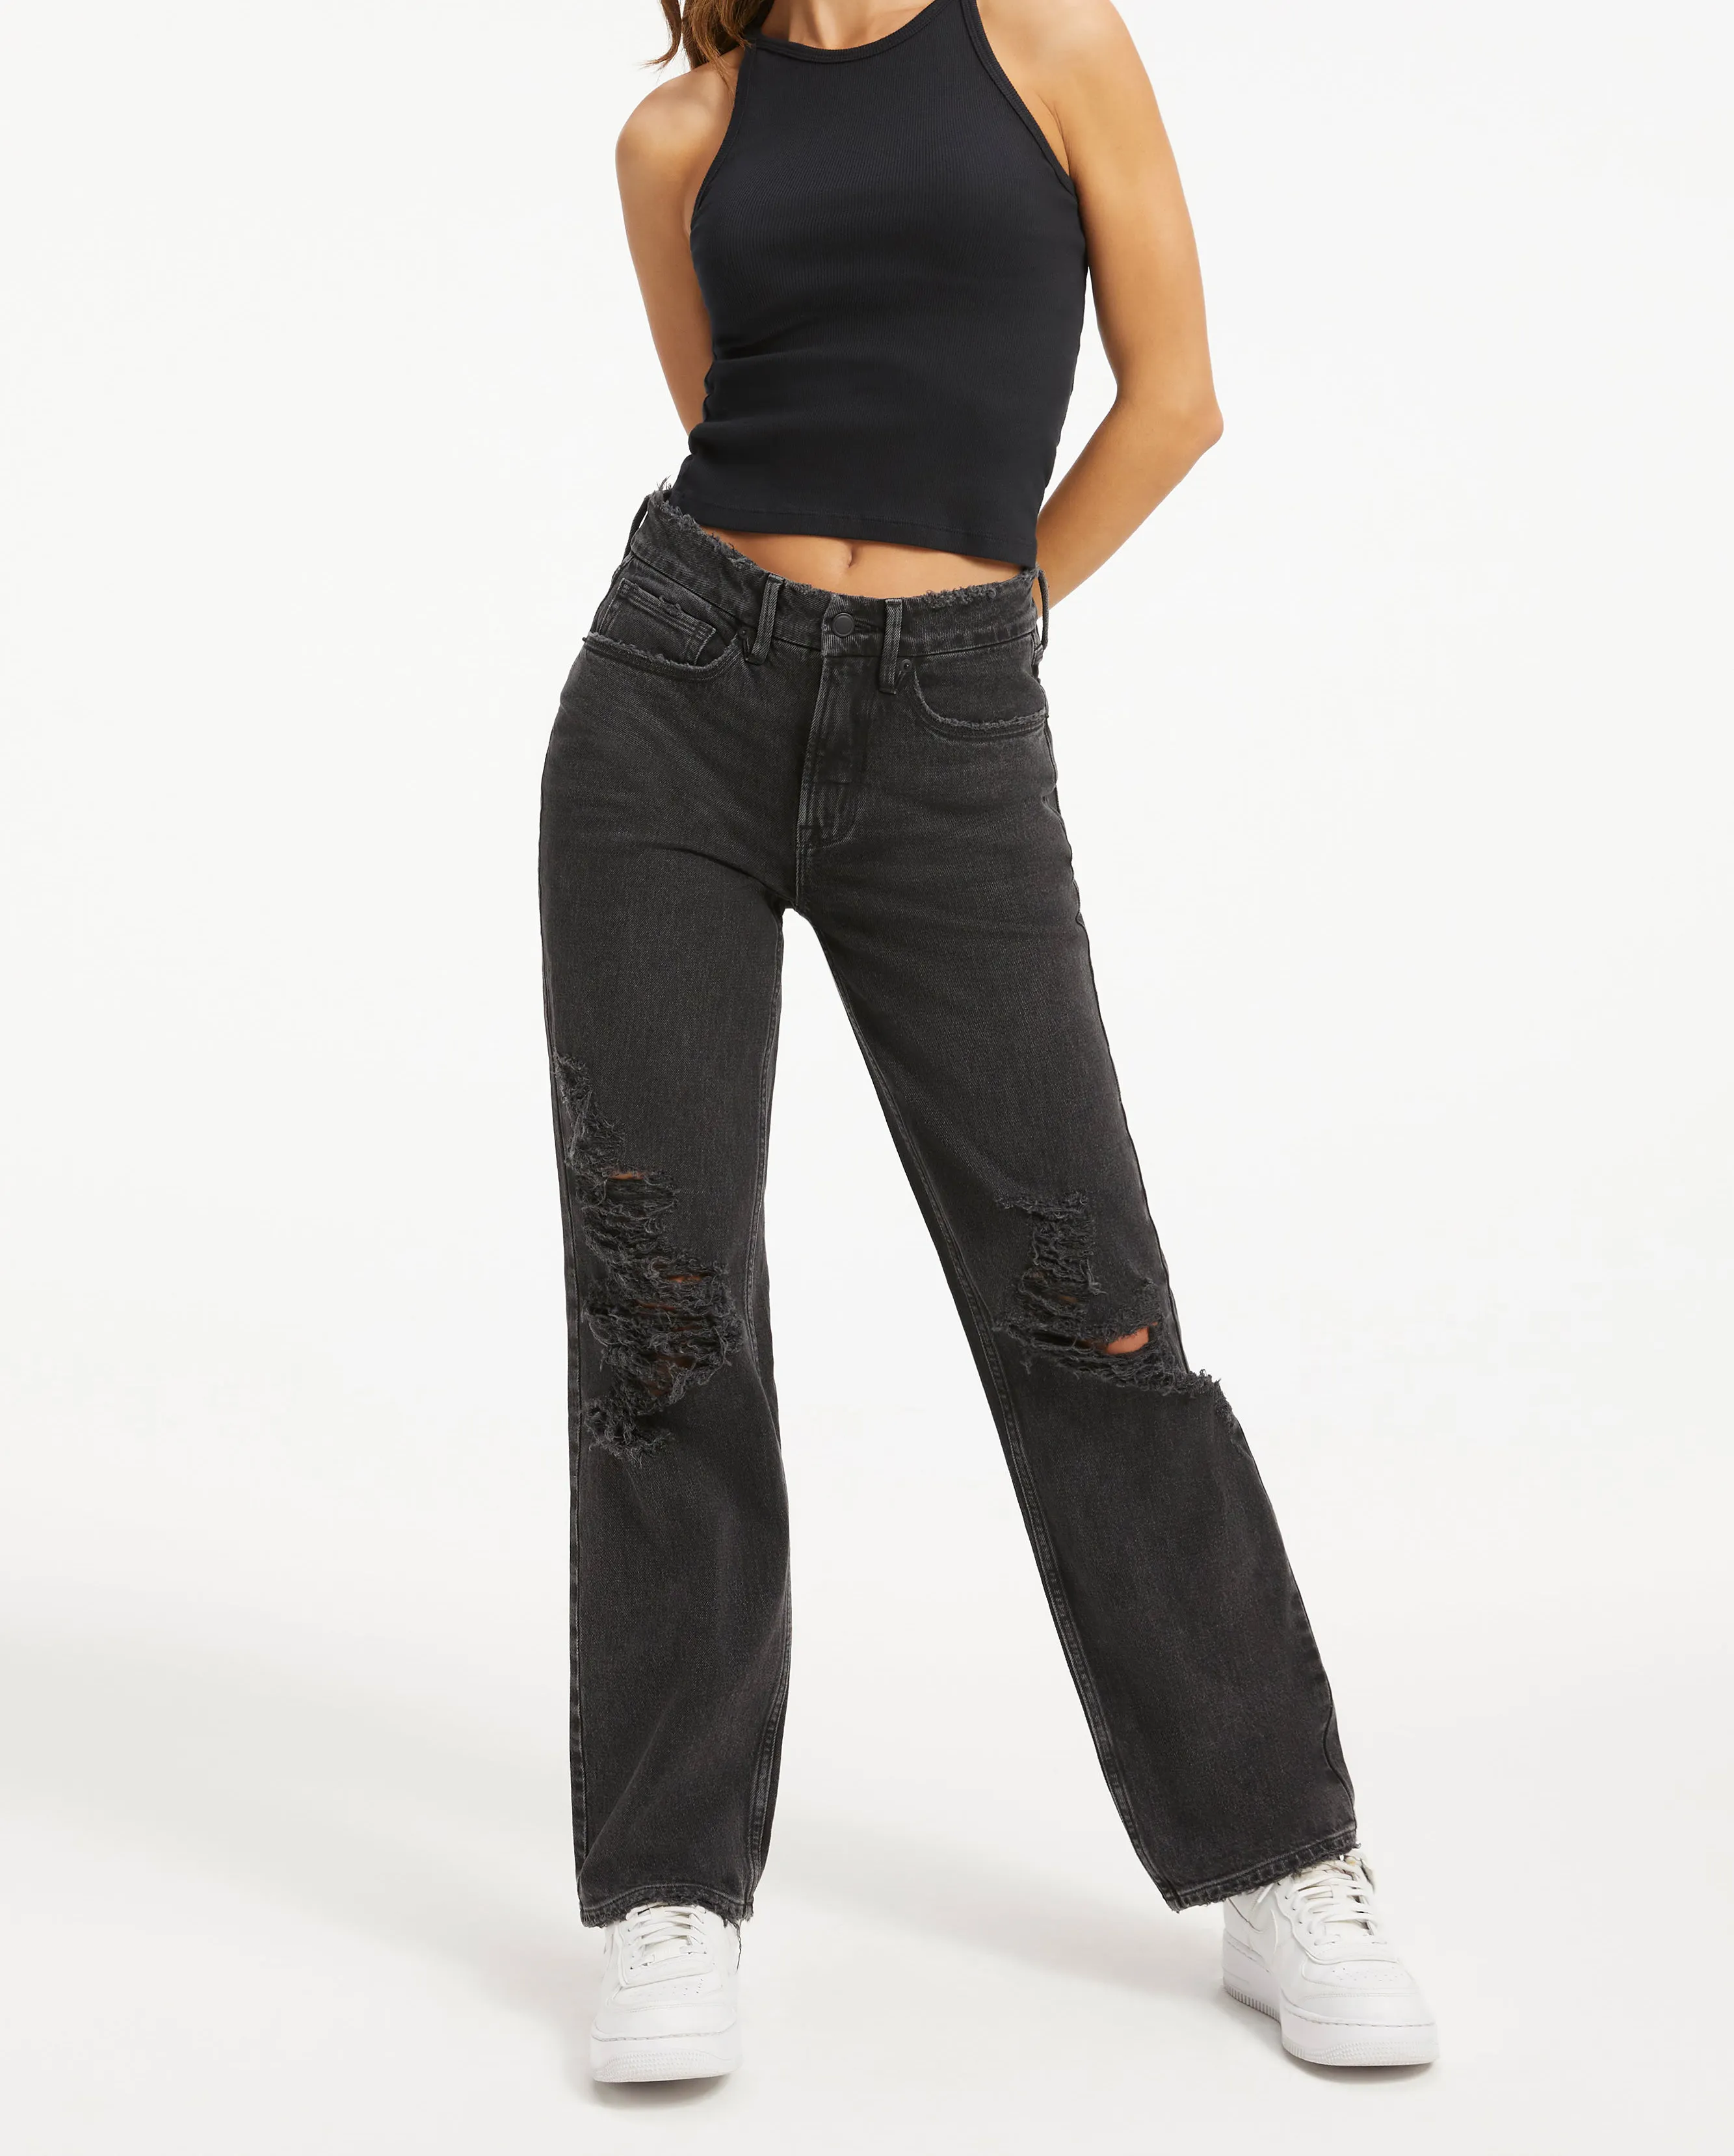 90s Vintage Cheap High Rise Black Wash Distressed Jeans Black Distressed Denim Pants Ladies Baggy Straight Leg Women Jeans